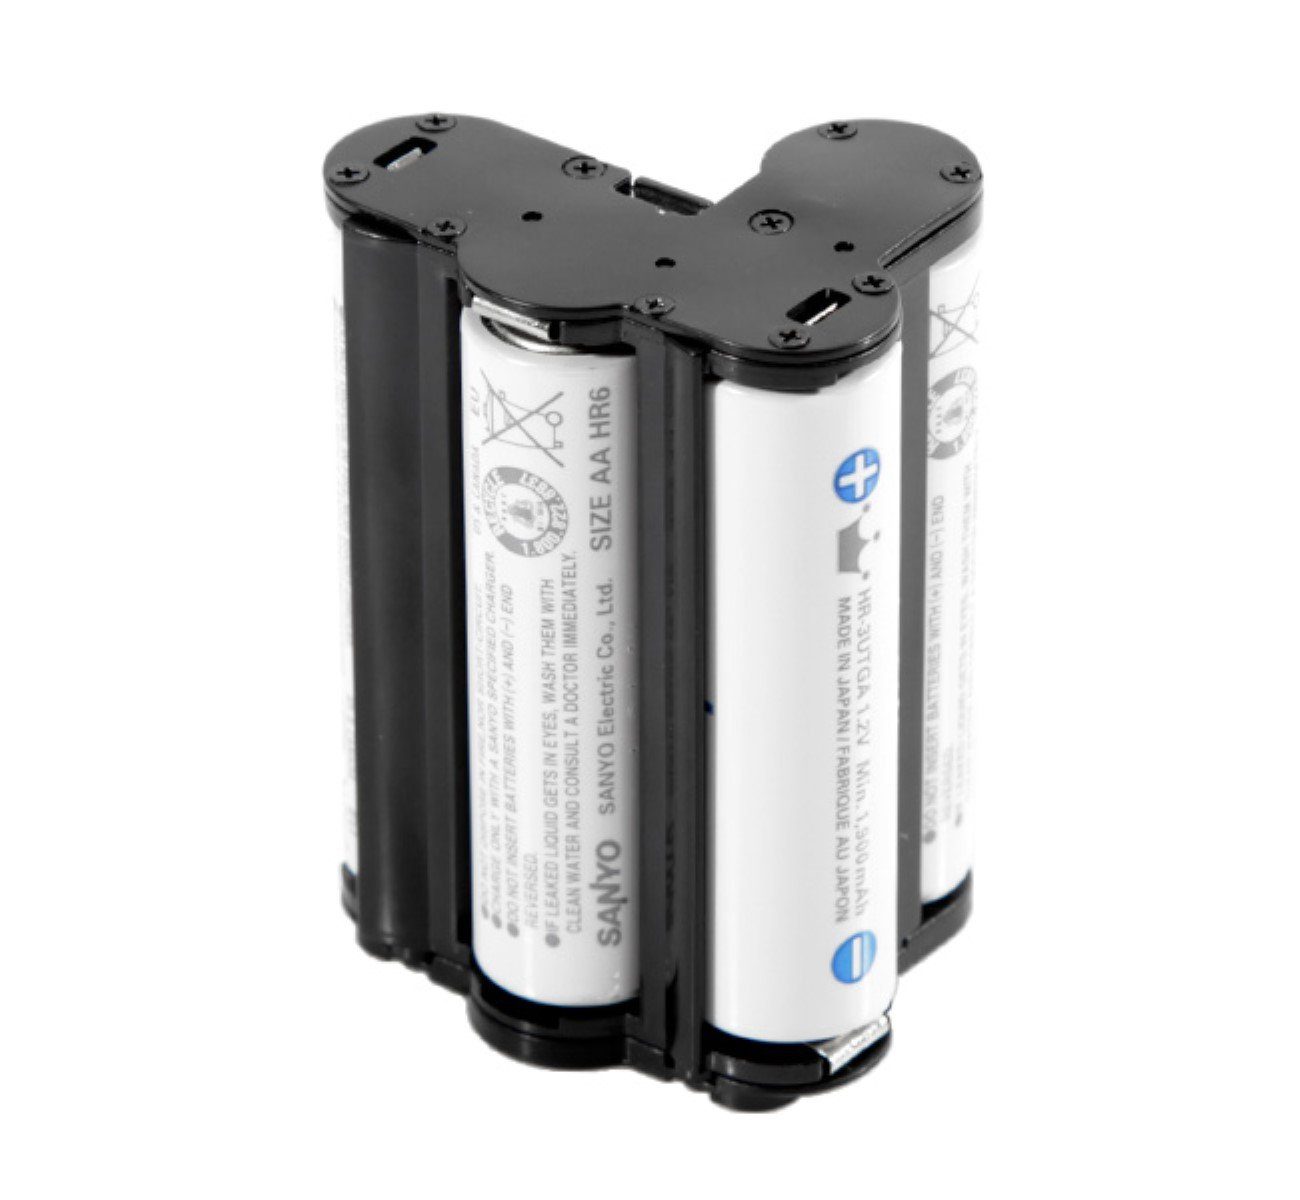 Akku für K-30 K-S1 K-500 K-S2 K-R ayex K-50 Pentax Holder Battery Batteriehalter